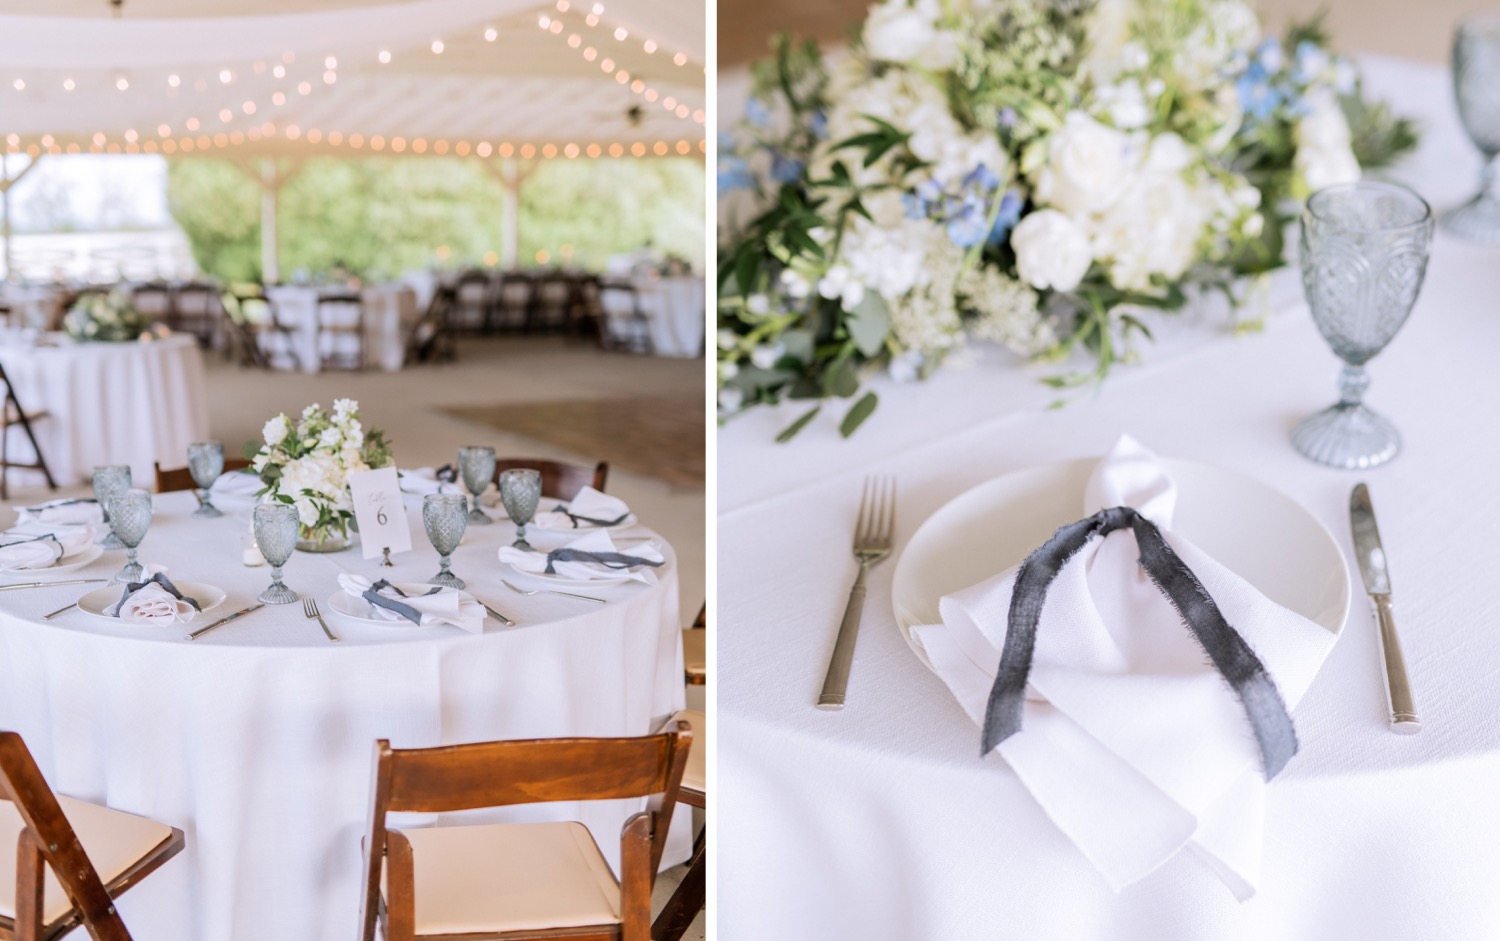 Wedding details during ceremony at James Monroe's Highland in Charlottesville, VA